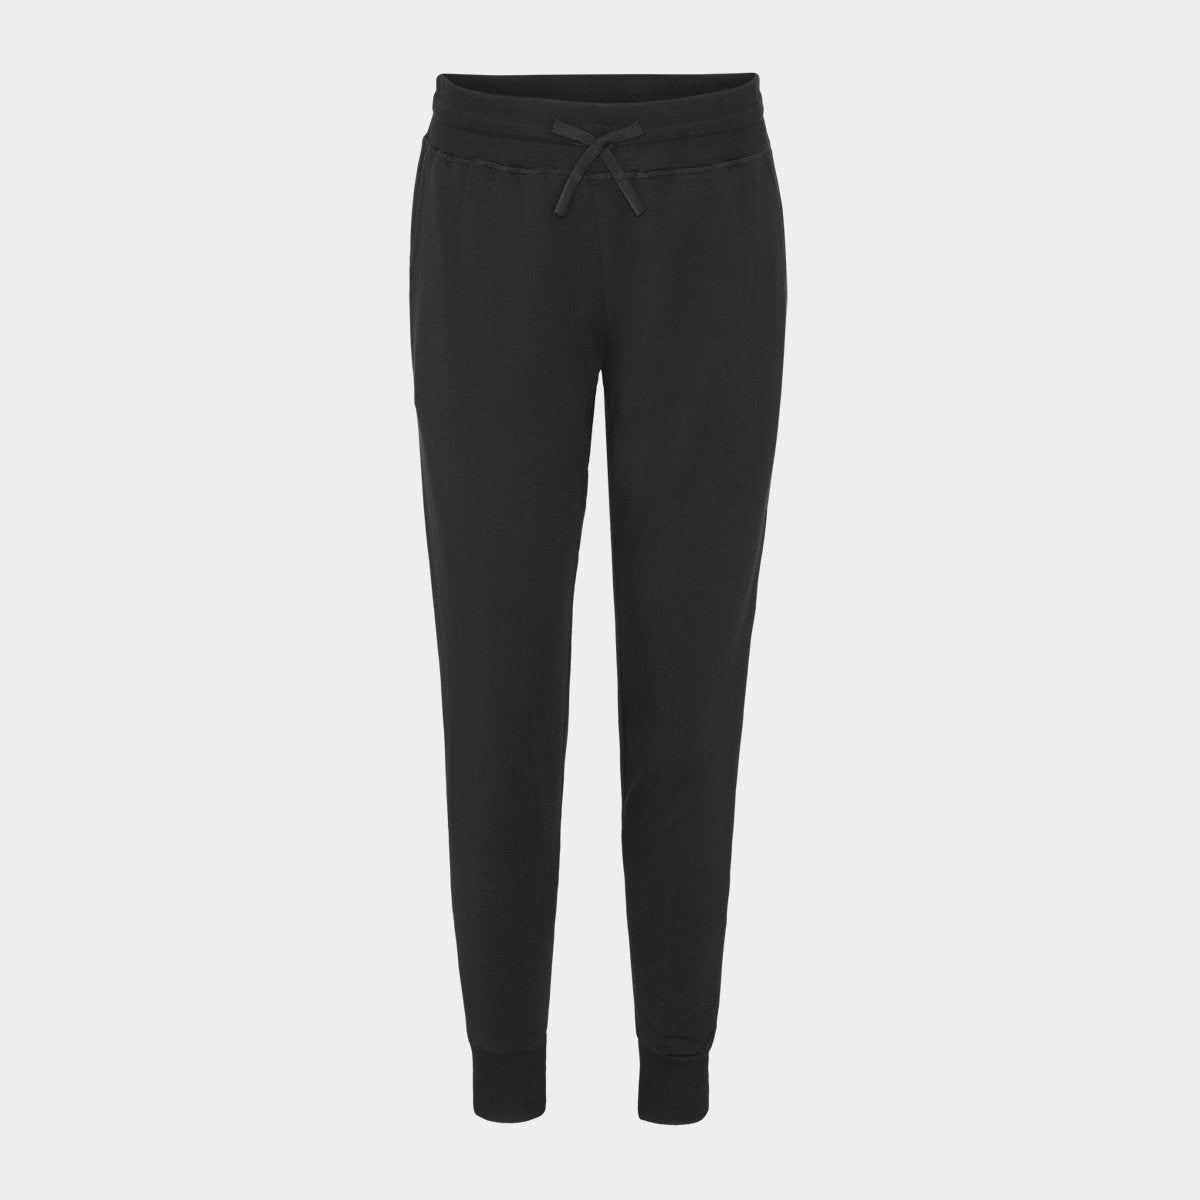 Bambus sweatpants | sorte sweatpants til damer fra Boody, XS